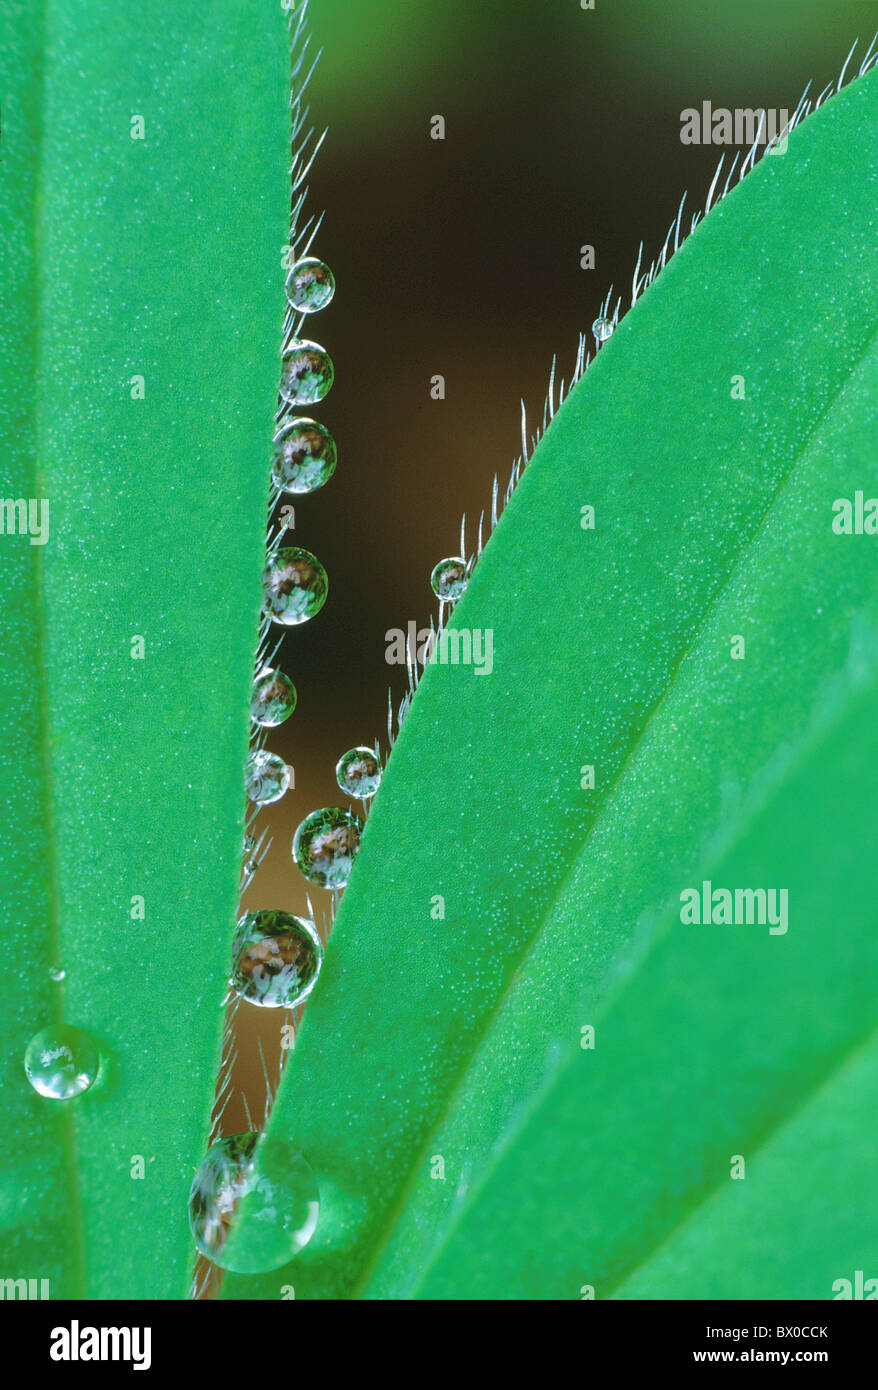 Alaska leaf Close up detail diagonally diagonal humidity moisture graphically green high portrait format Stock Photo